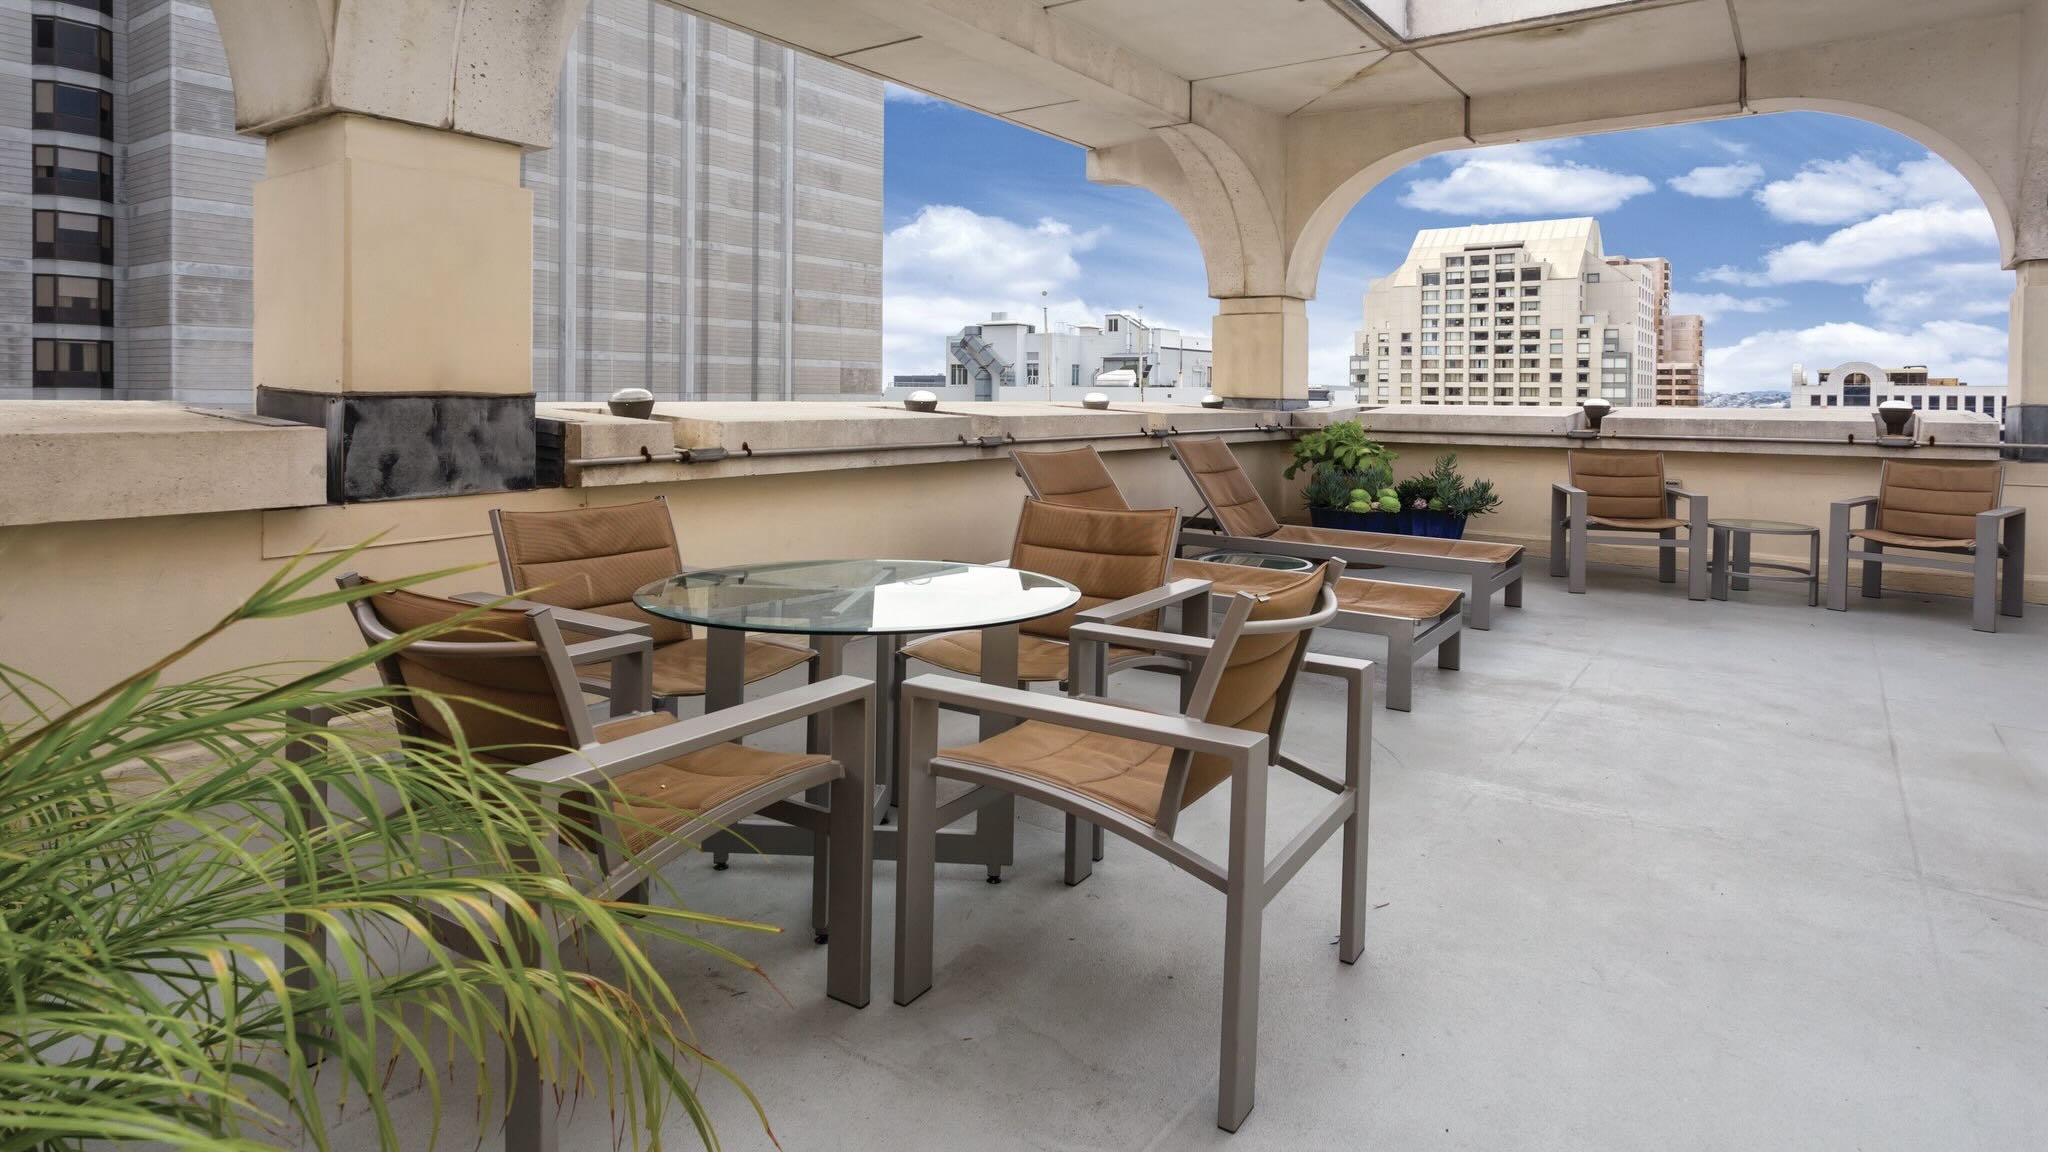 The Donatello Hotel San Francisco rooftop bar